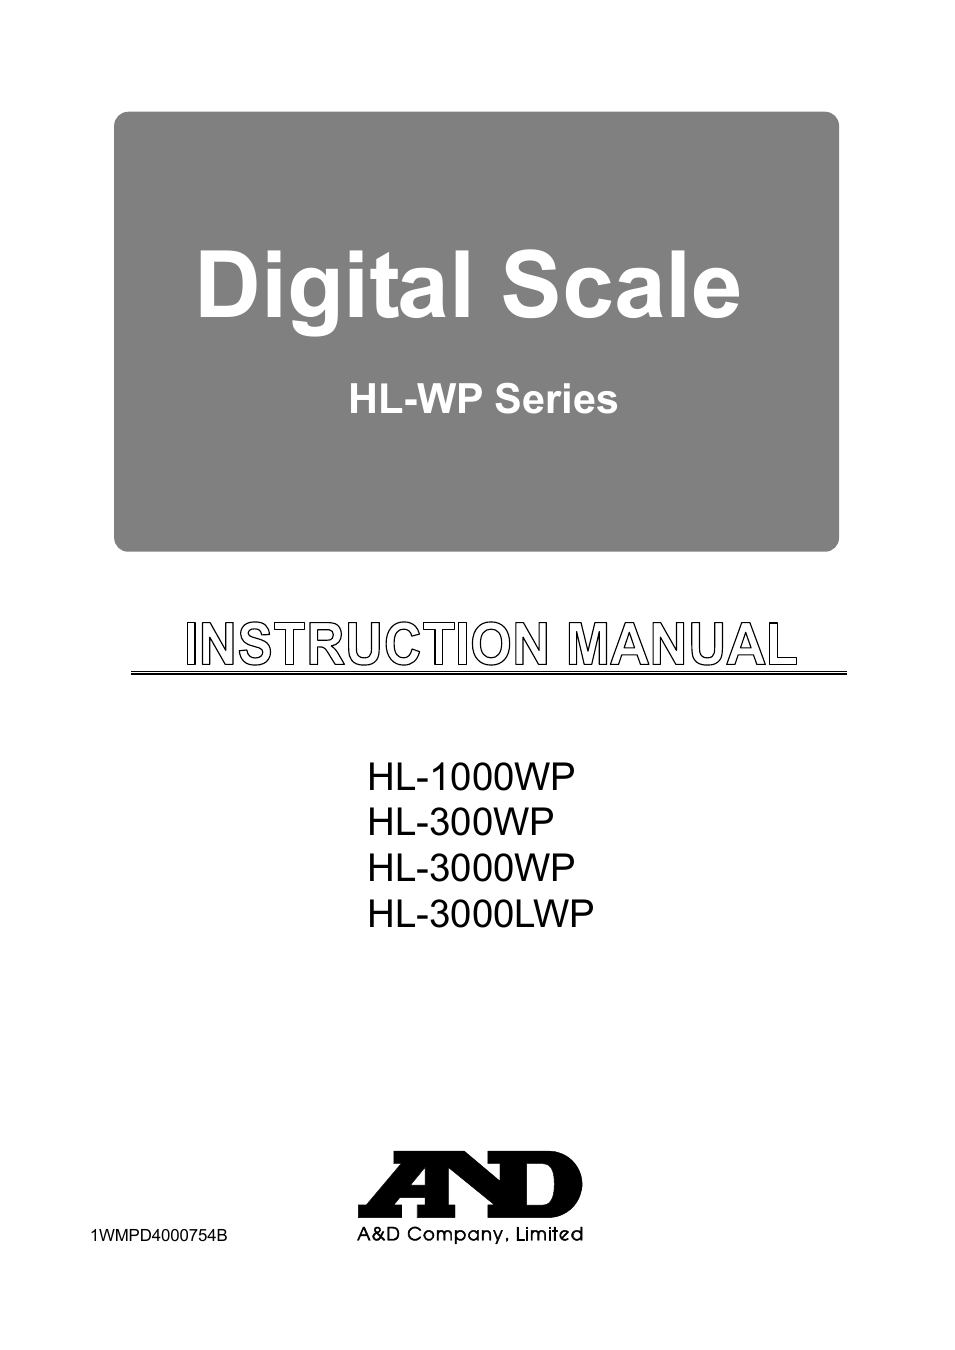 Digital Scale HL-300WP